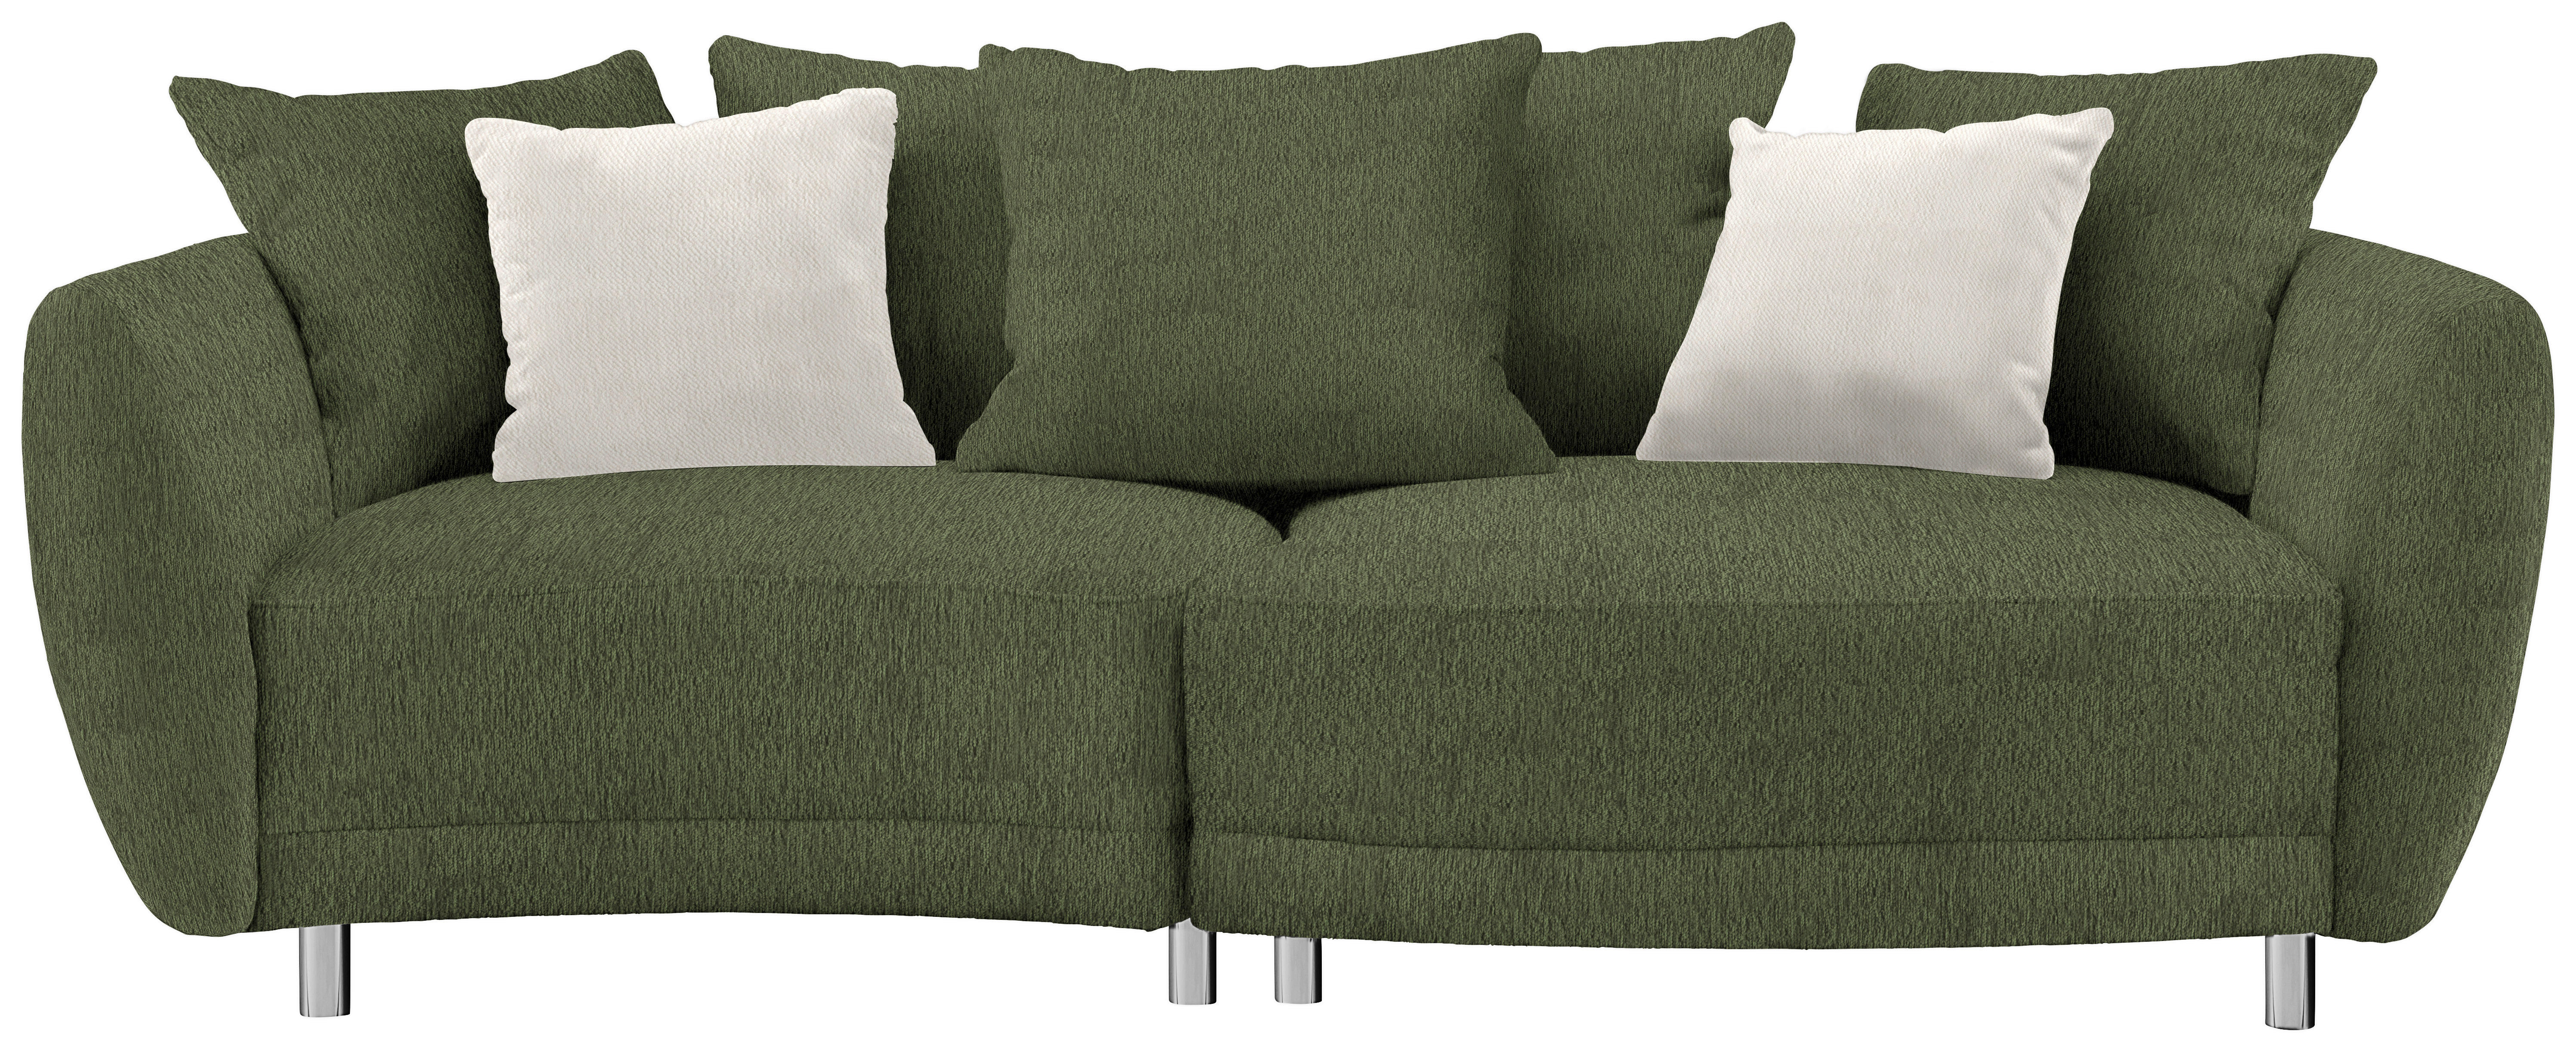 BIGSOFA Chenille Olivgrün  - Silberfarben/Olivgrün, Design, Kunststoff/Textil (243/72/143cm) - Carryhome